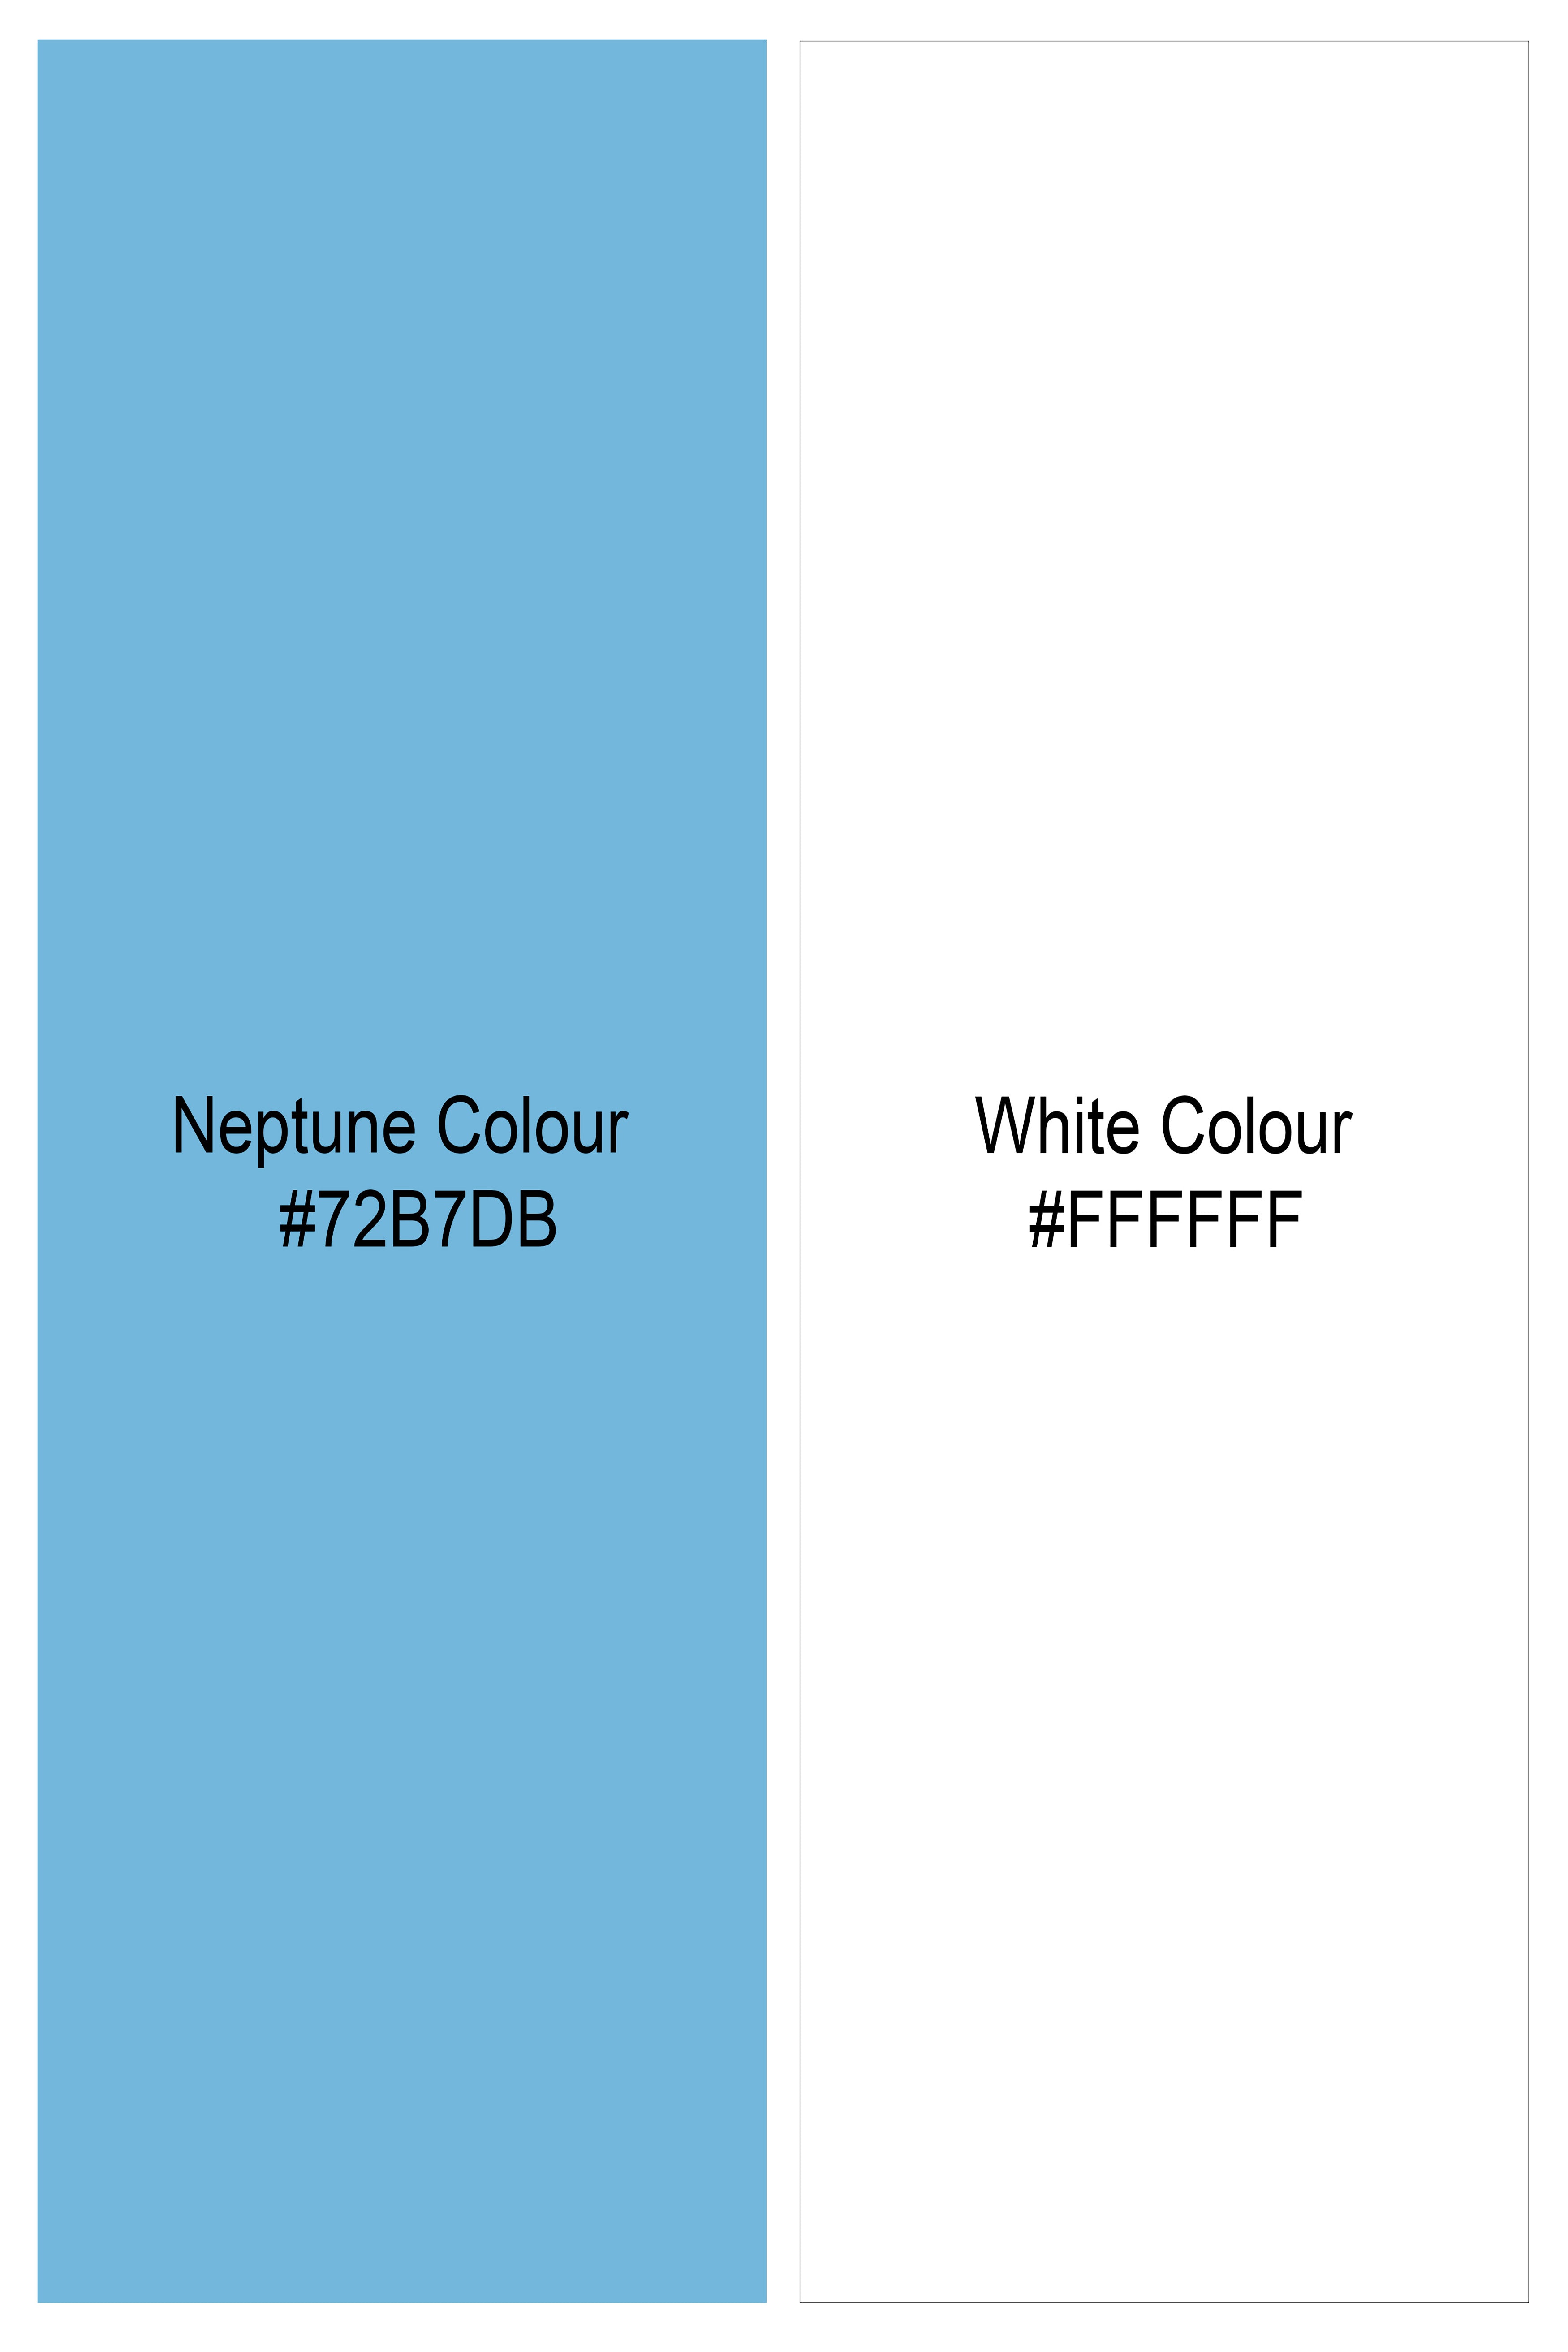 Neptune Sky Blue and White Striped Seersucker Shirt 10166-CA-38, 10166-CA-H-38, 10166-CA-39, 10166-CA-H-39, 10166-CA-40, 10166-CA-H-40, 10166-CA-42, 10166-CA-H-42, 10166-CA-44, 10166-CA-H-44, 10166-CA-46, 10166-CA-H-46, 10166-CA-48, 10166-CA-H-48, 10166-CA-50, 10166-CA-H-50, 10166-CA-52, 10166-CA-H-52